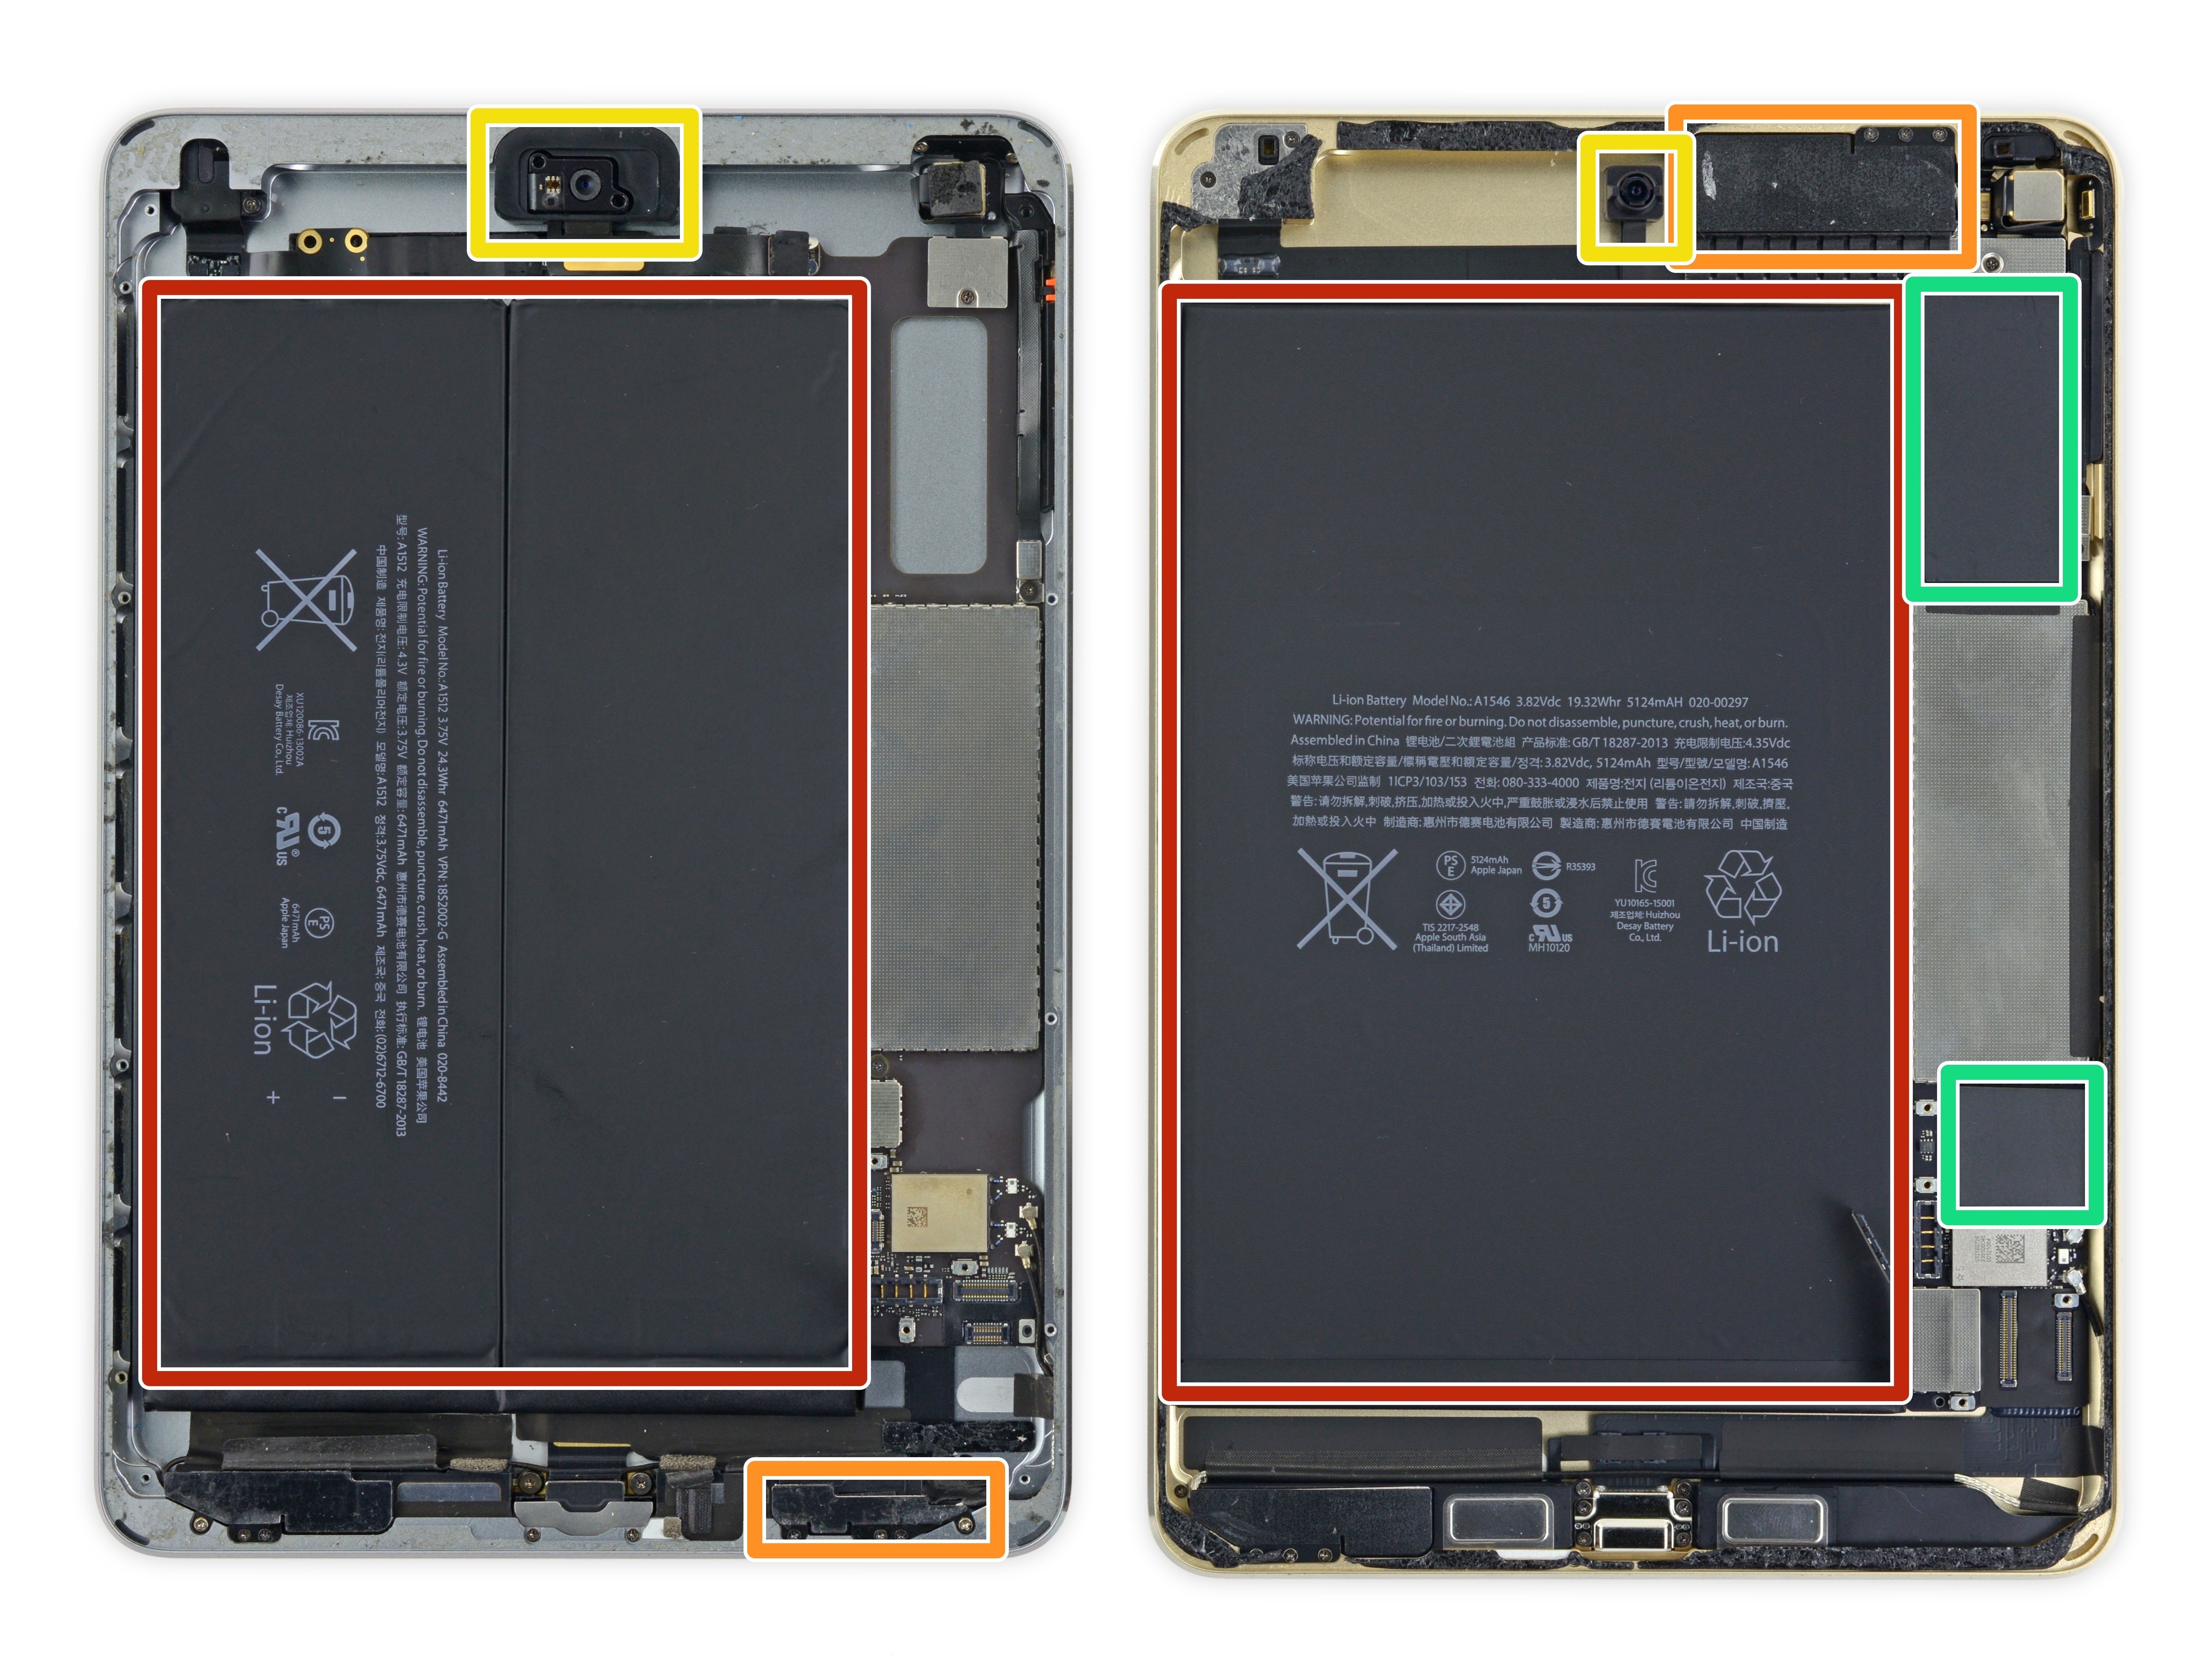 iPad Mini 4 teardown: Shrunken battery, double RAM | Macworld